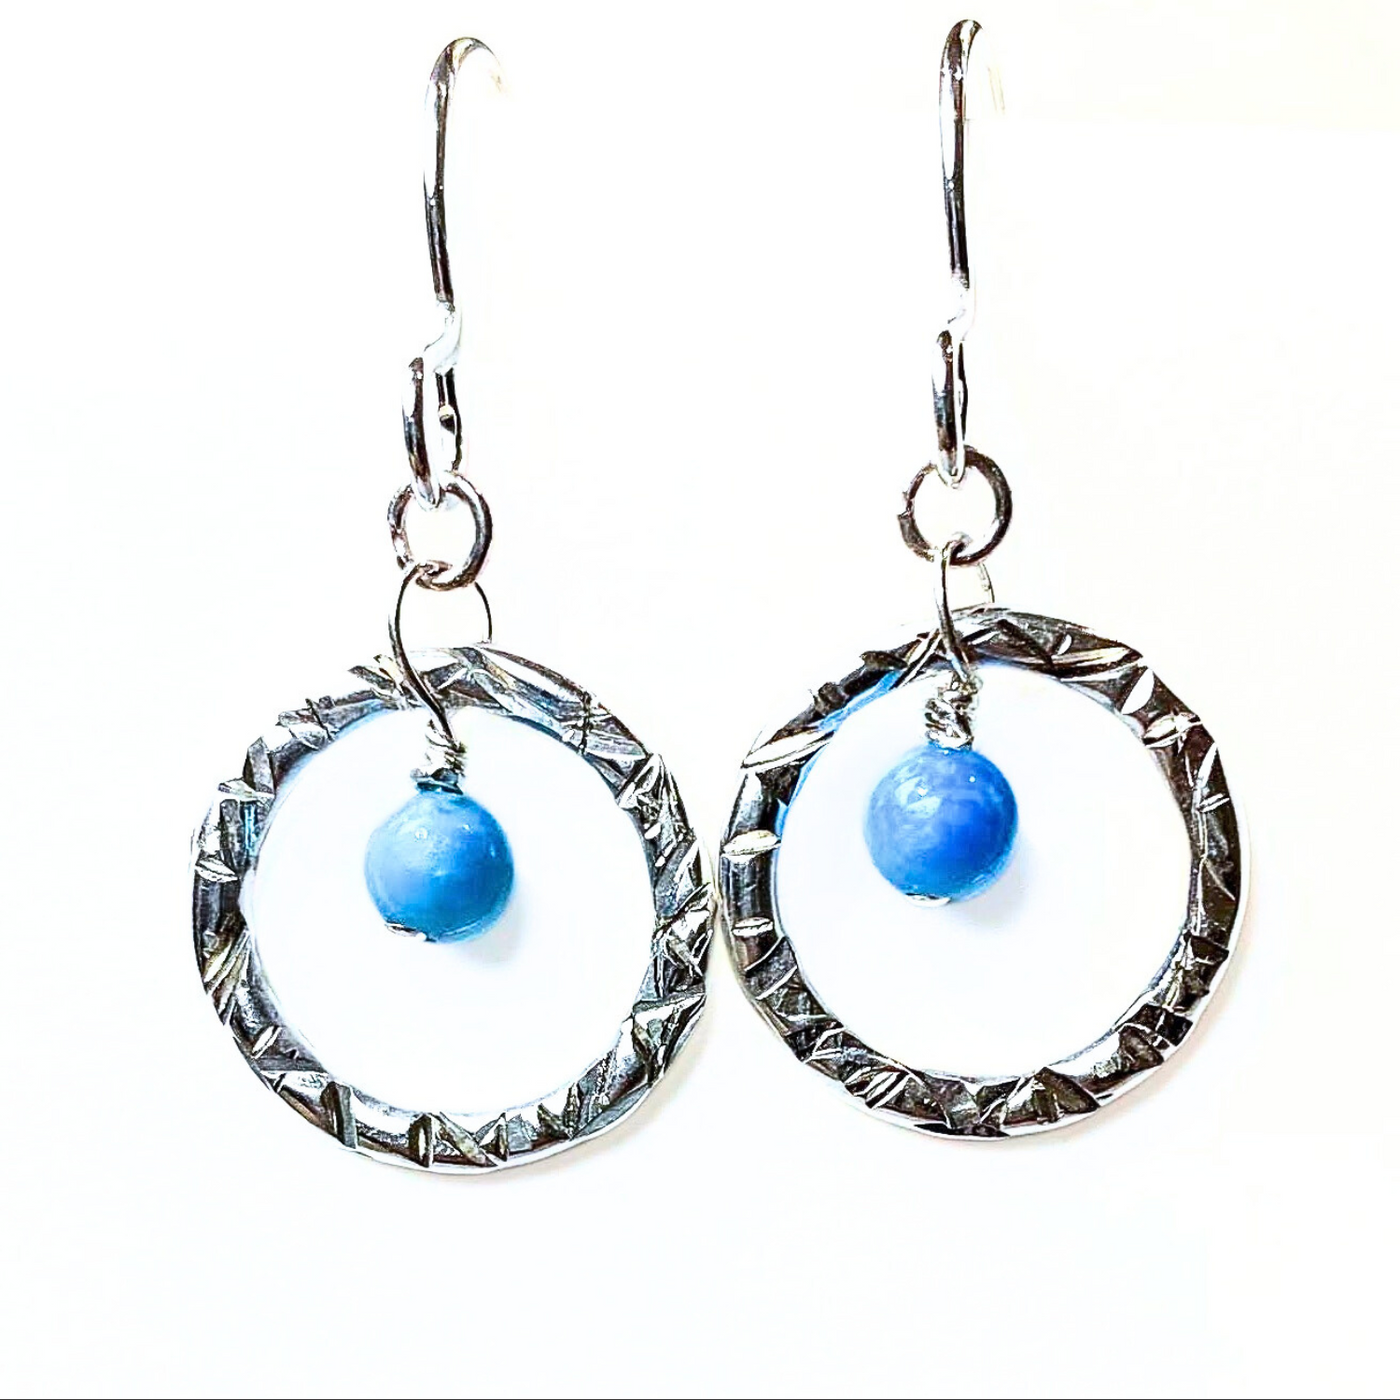 SA-074 Textured Ring w/Blue Apatite Inside Dangle Earrings